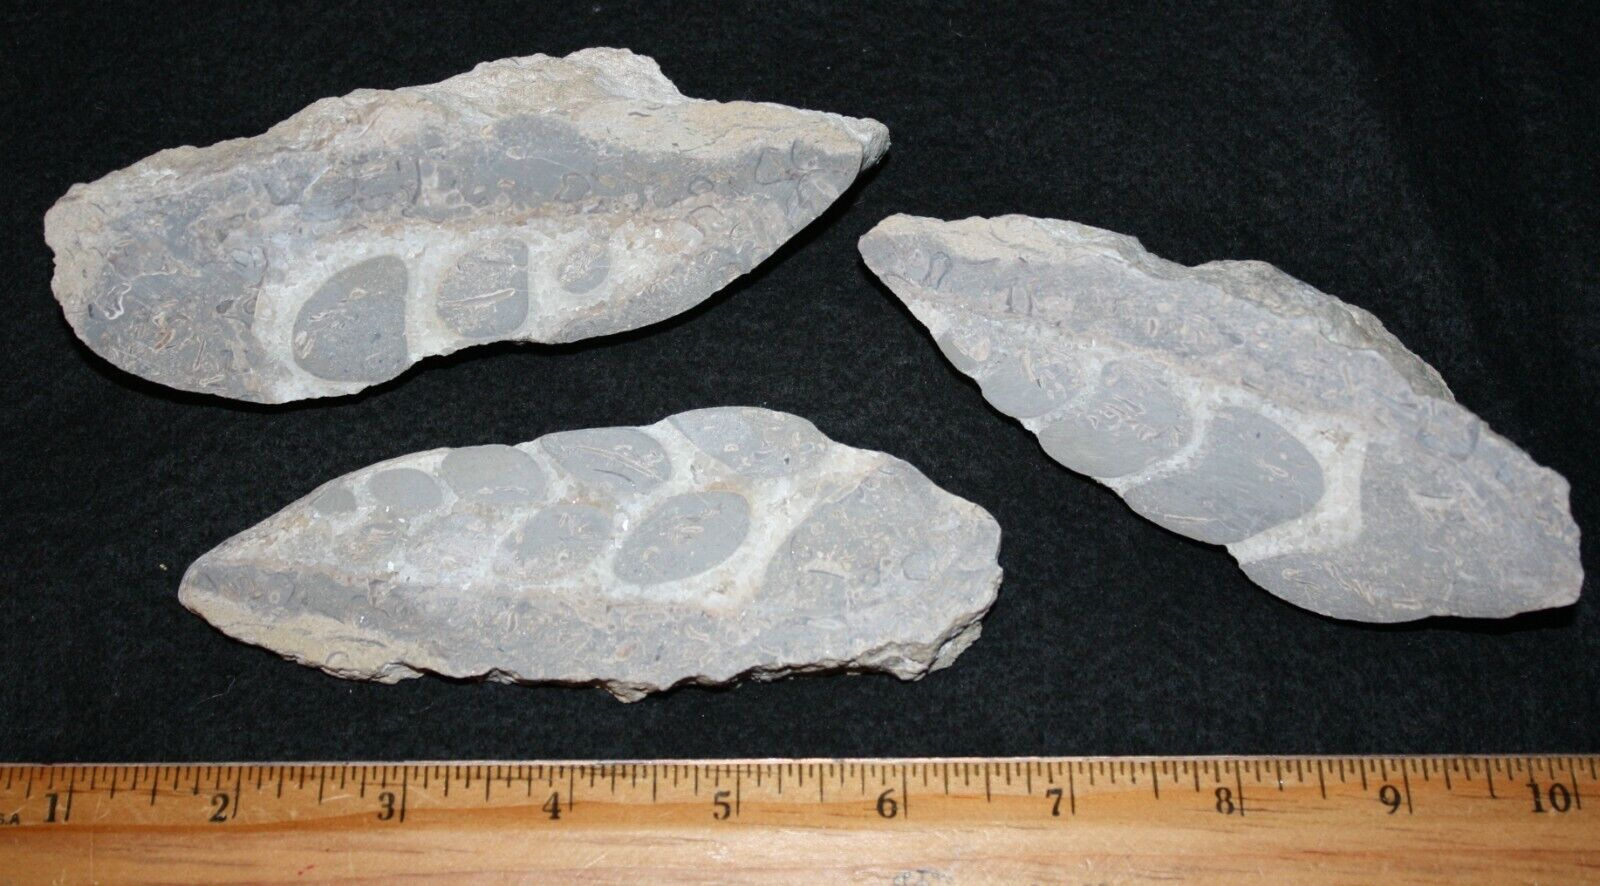 Carboniferous Yorkshire Yordale Group giant fossil snail in rock slice unusual